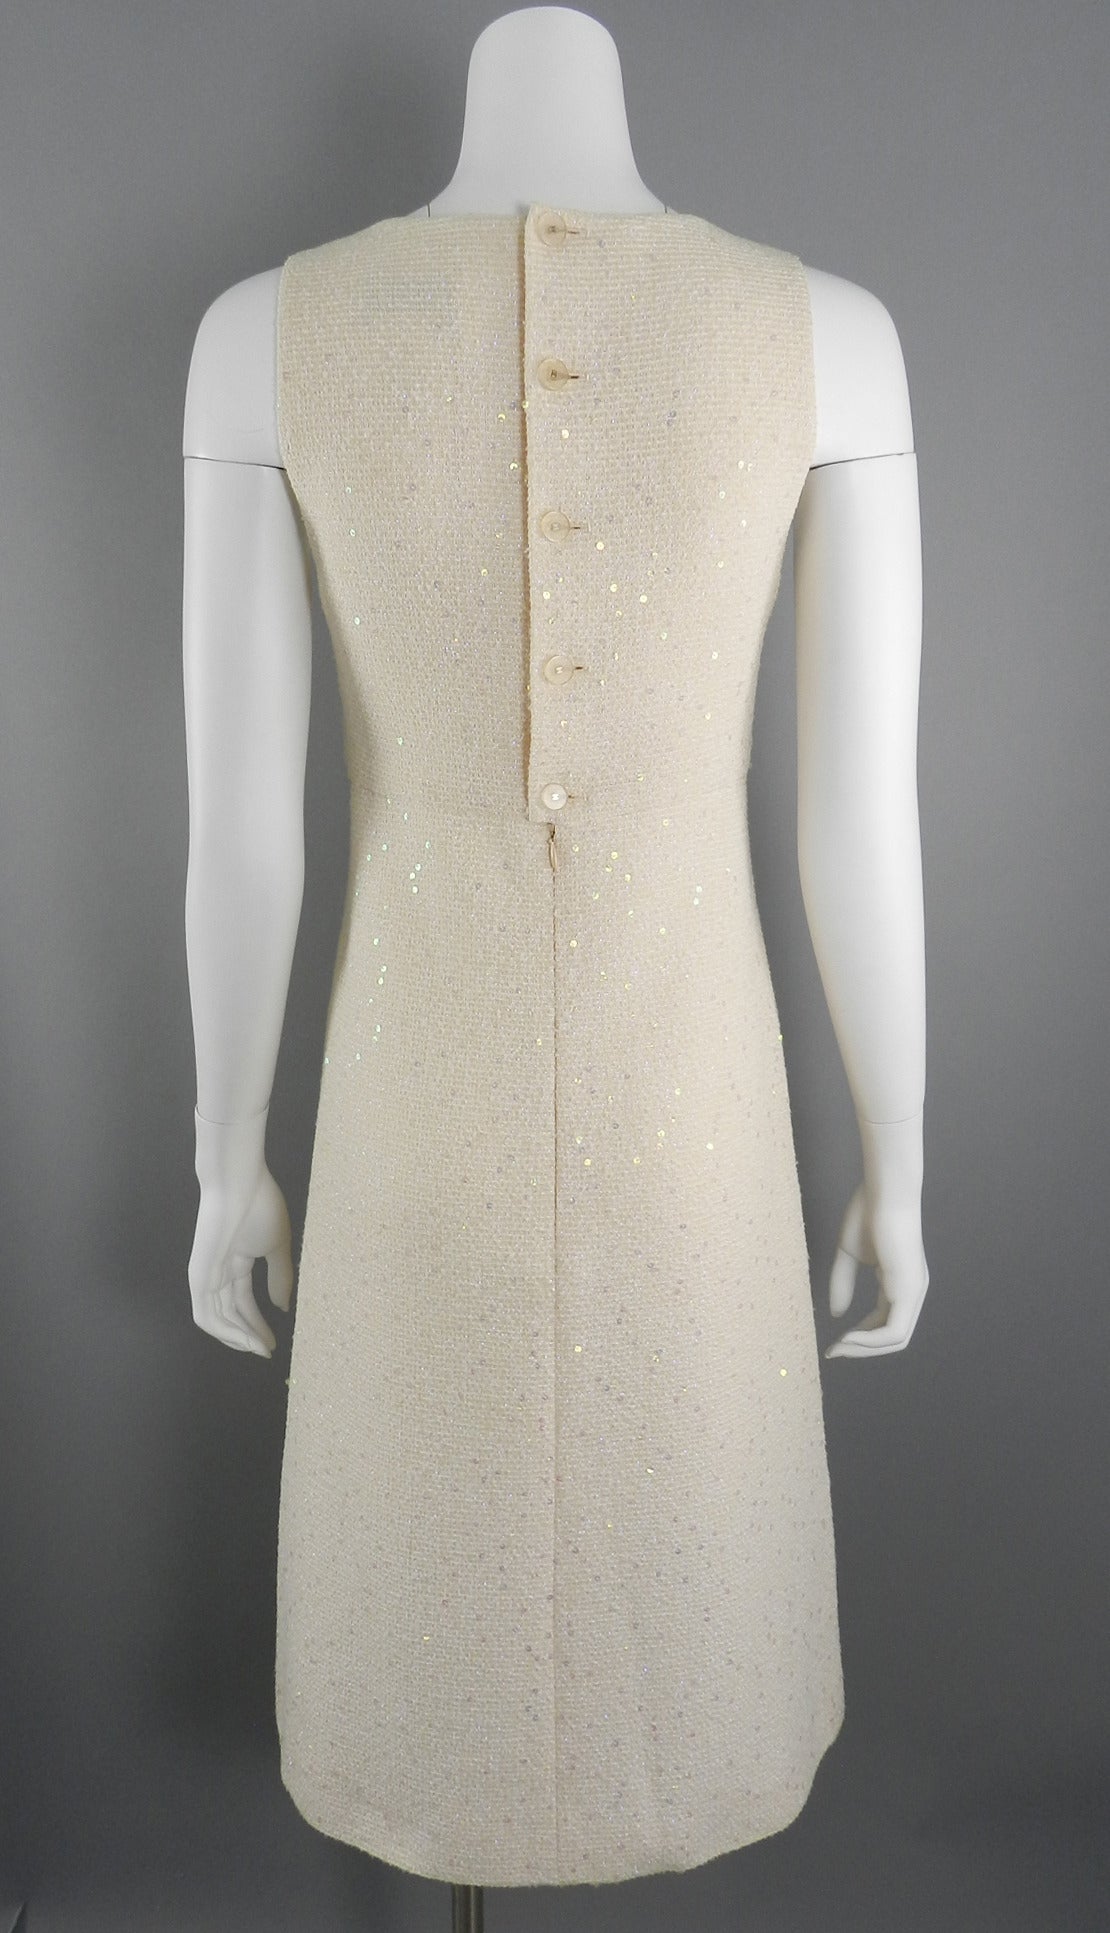 Women's Chanel Ivory Sequin Dress size 38